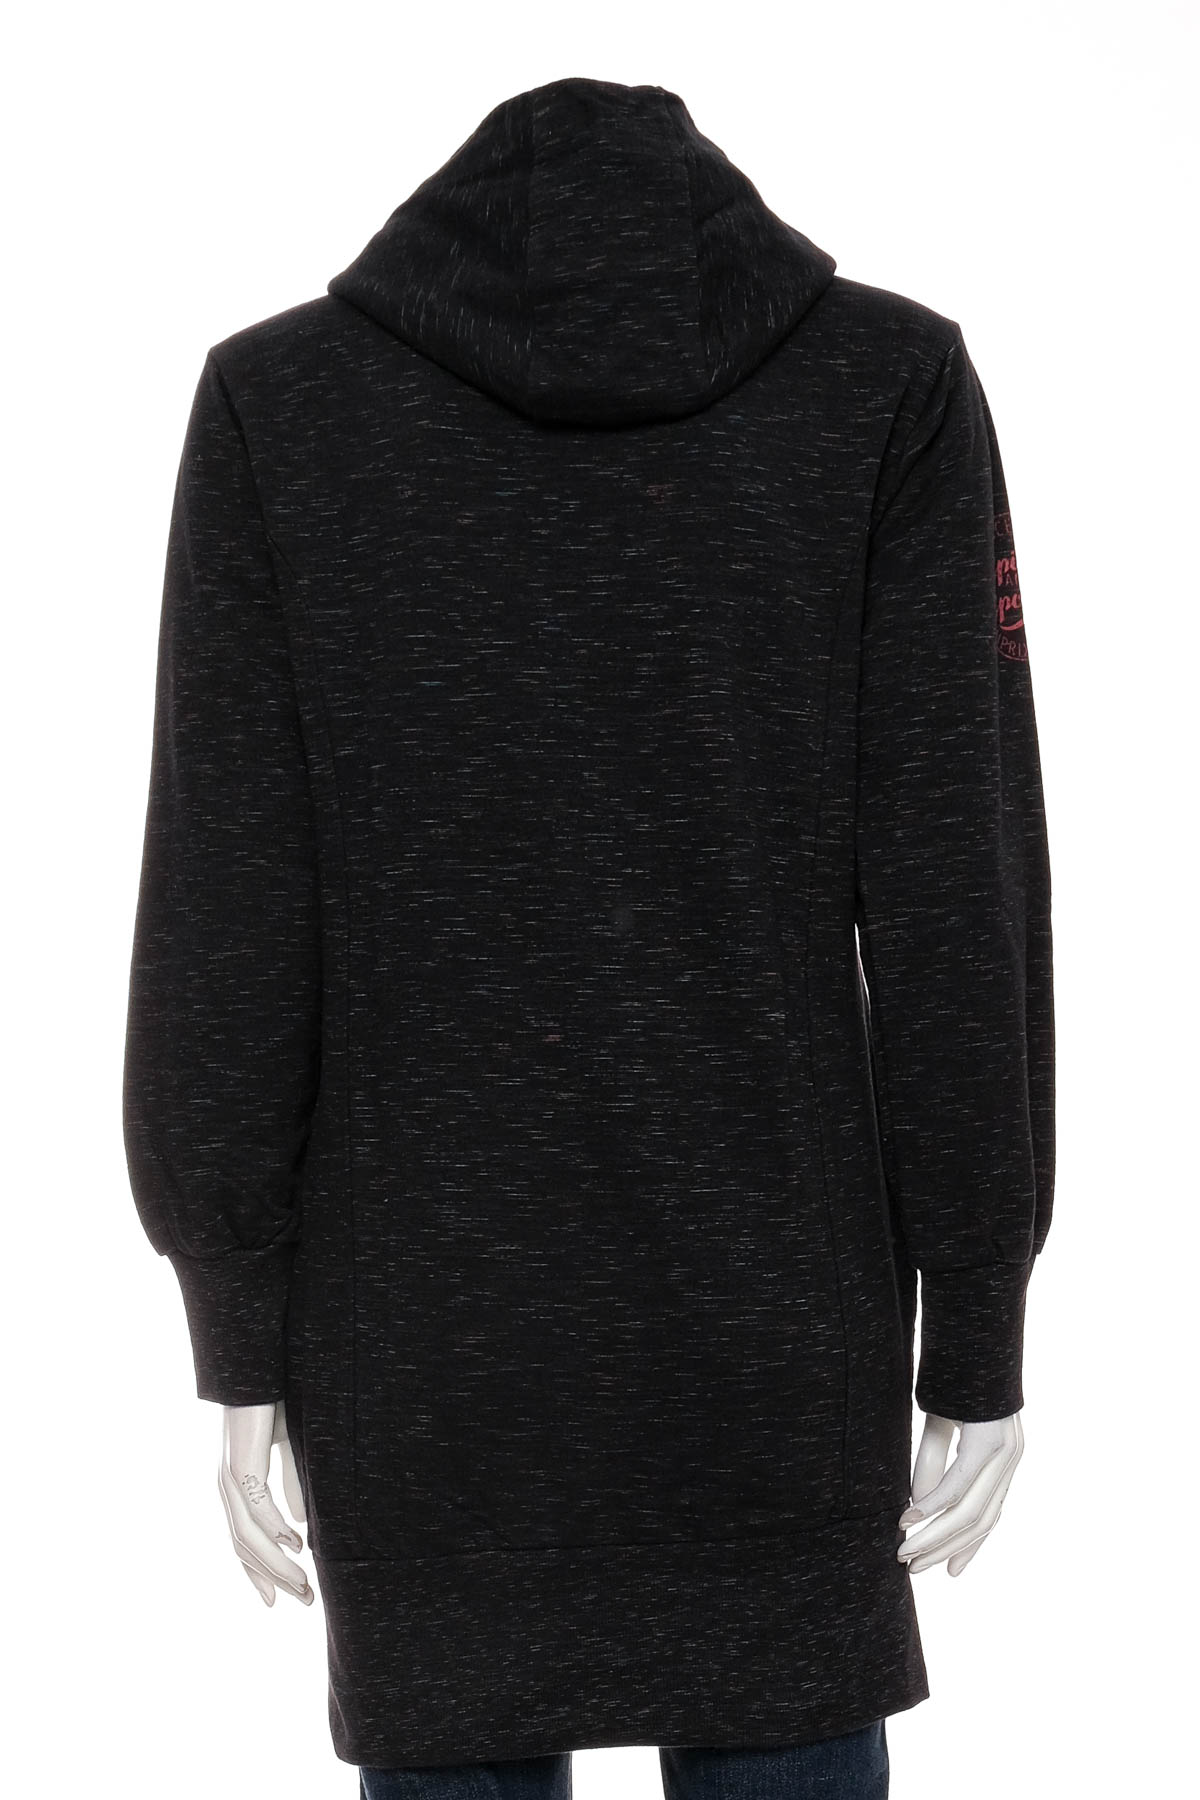 Sweatshirt for Girl - Bpc Bonprix Collection - 1